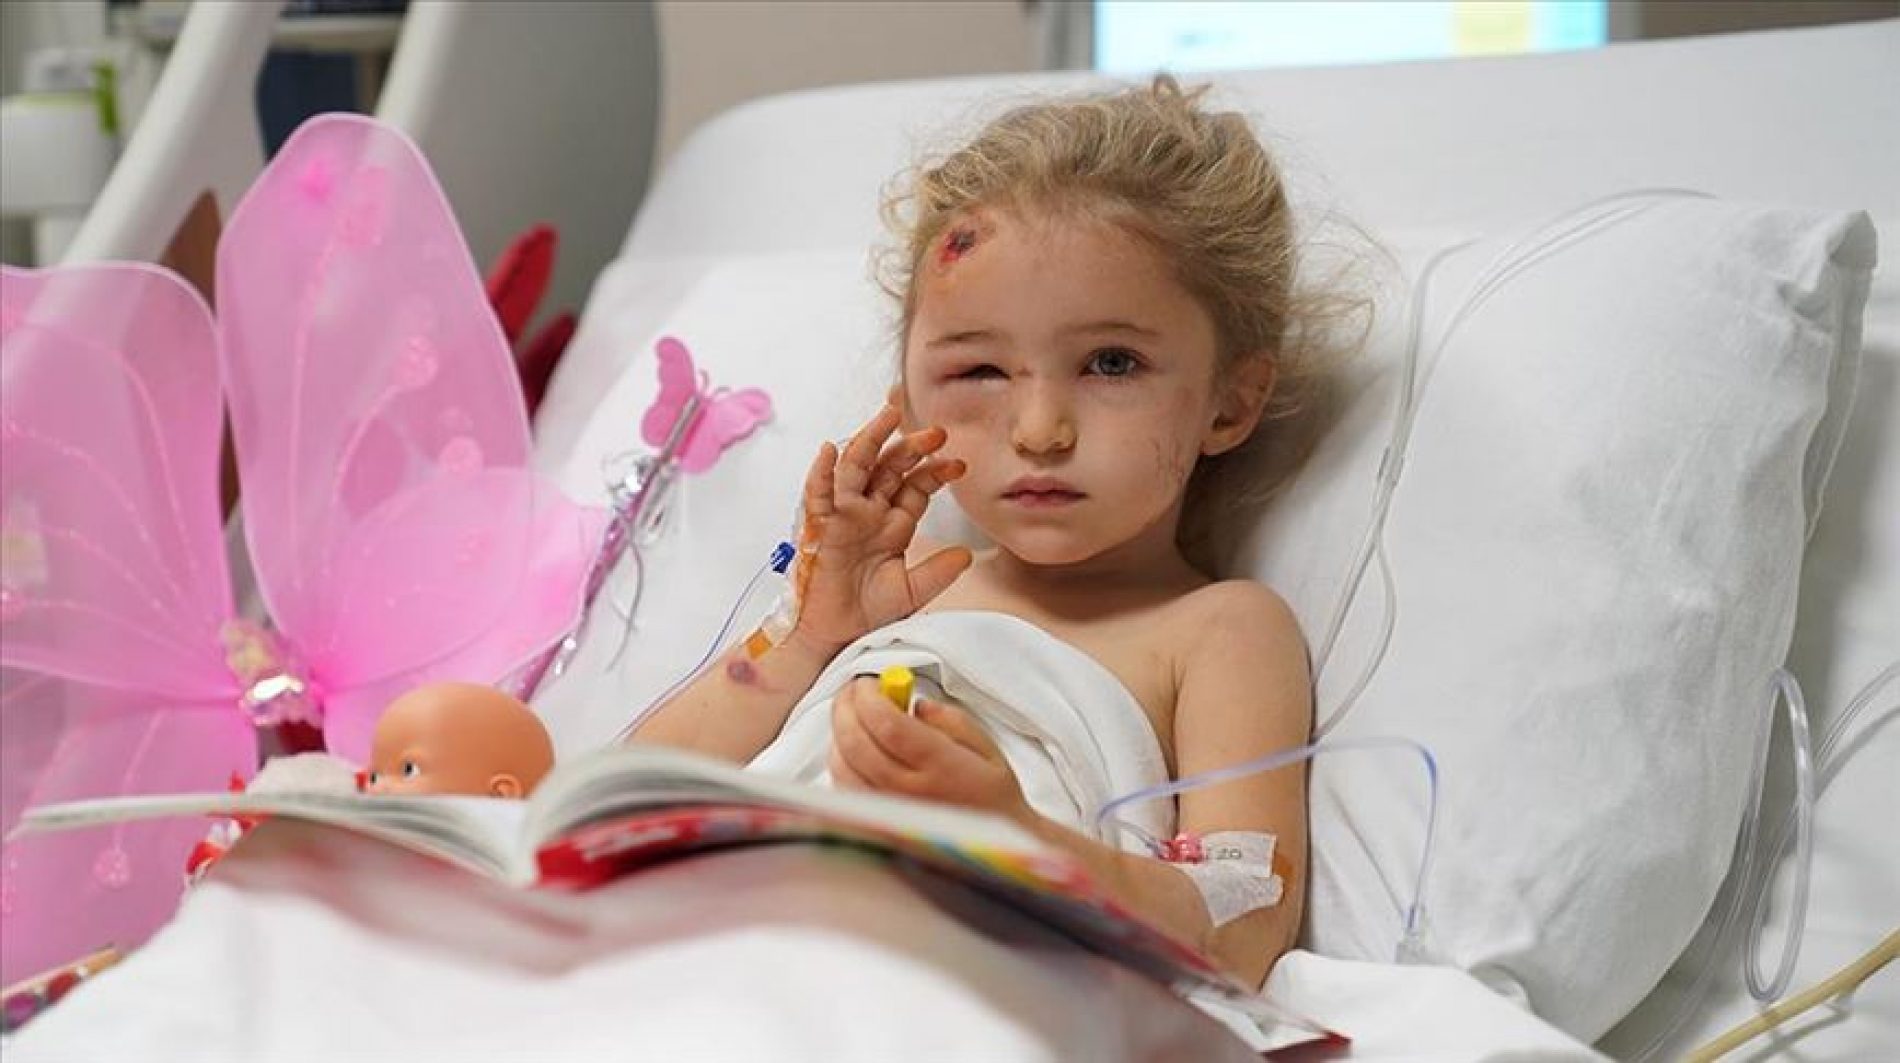 Turska: Trogodišnja djevojčica spašena iz ruševina 65 sati nakon zemljotresa otvorila oči